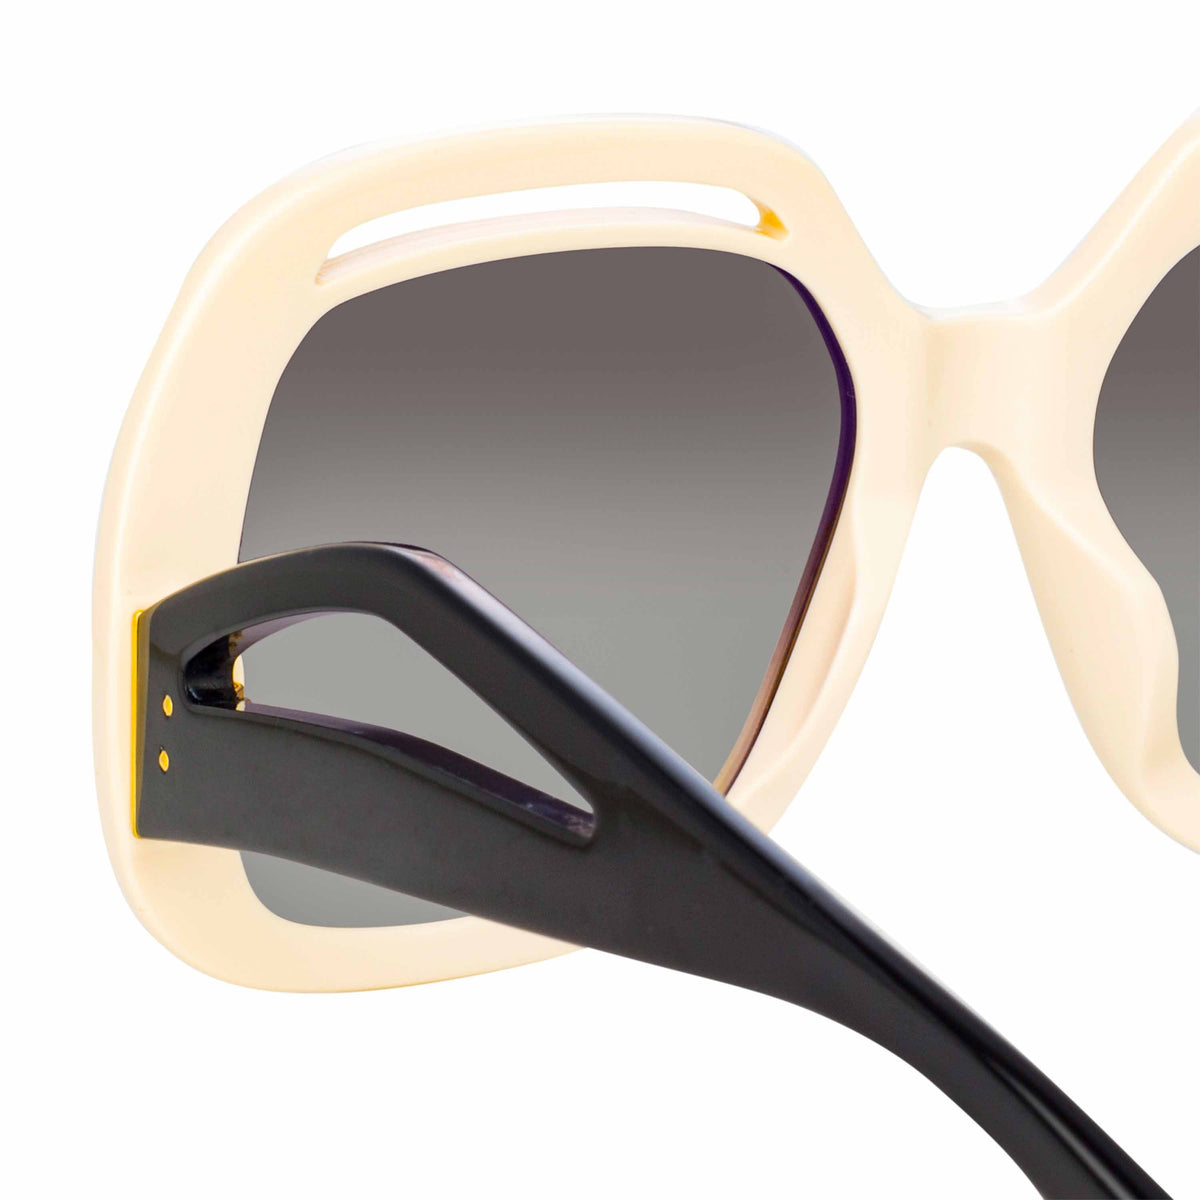 Oversized Square Sunglasses in Cream